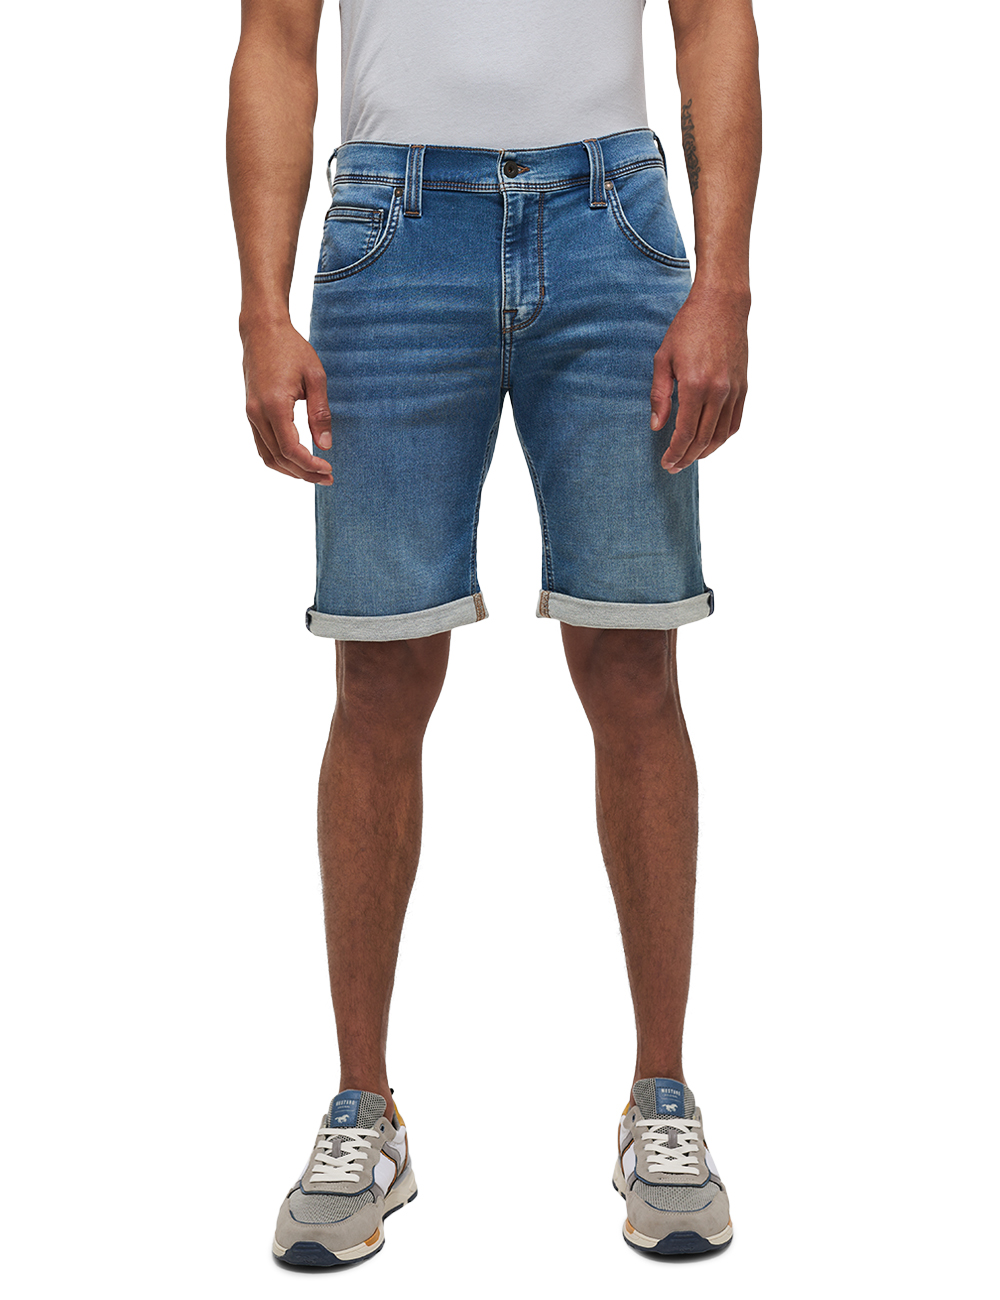 shoppen - Modetrends Shorts online jetzt aktuelle Jeans